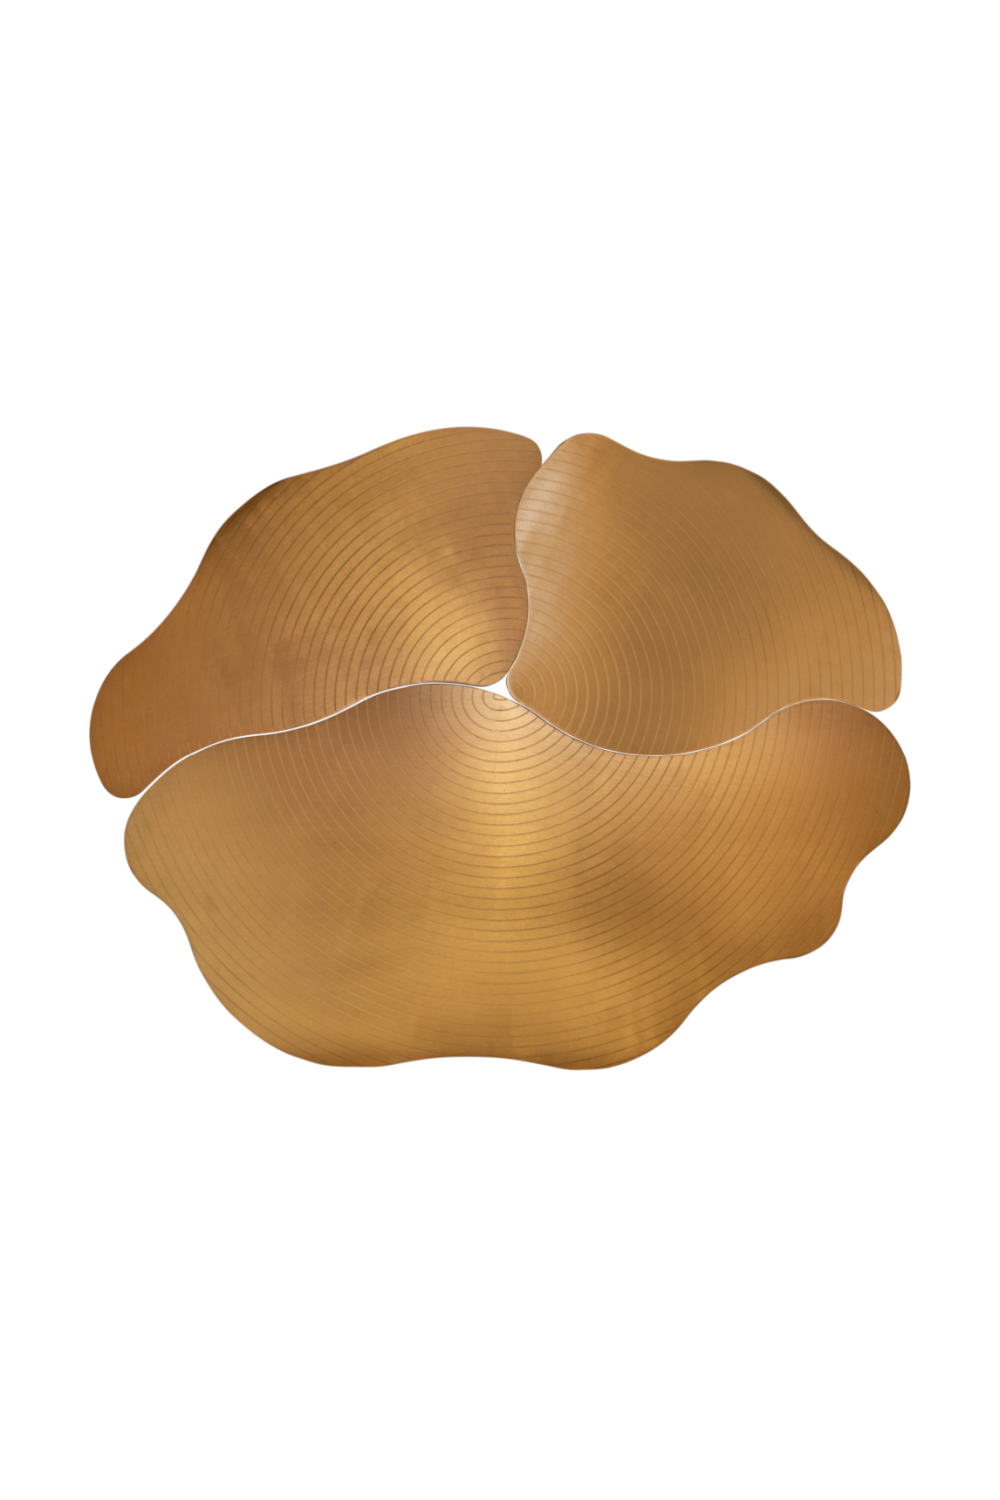 Abstract Shaped Gold Coffee Tables Set (3) | OROA Tree | OROA.com